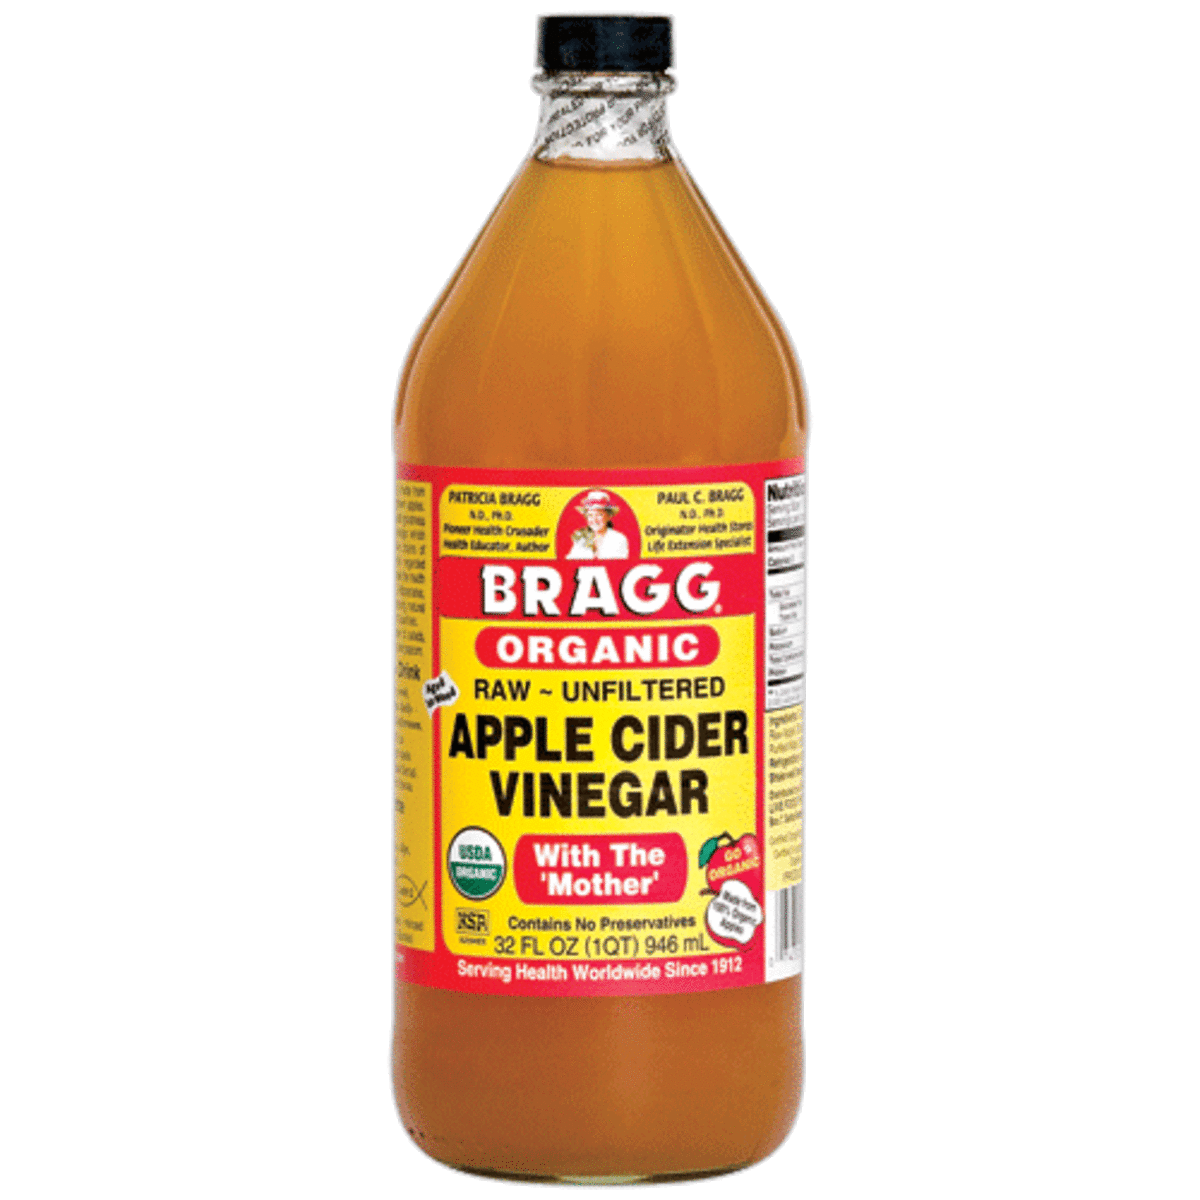 Apple Cider Vinegar Health Benefits and Uses